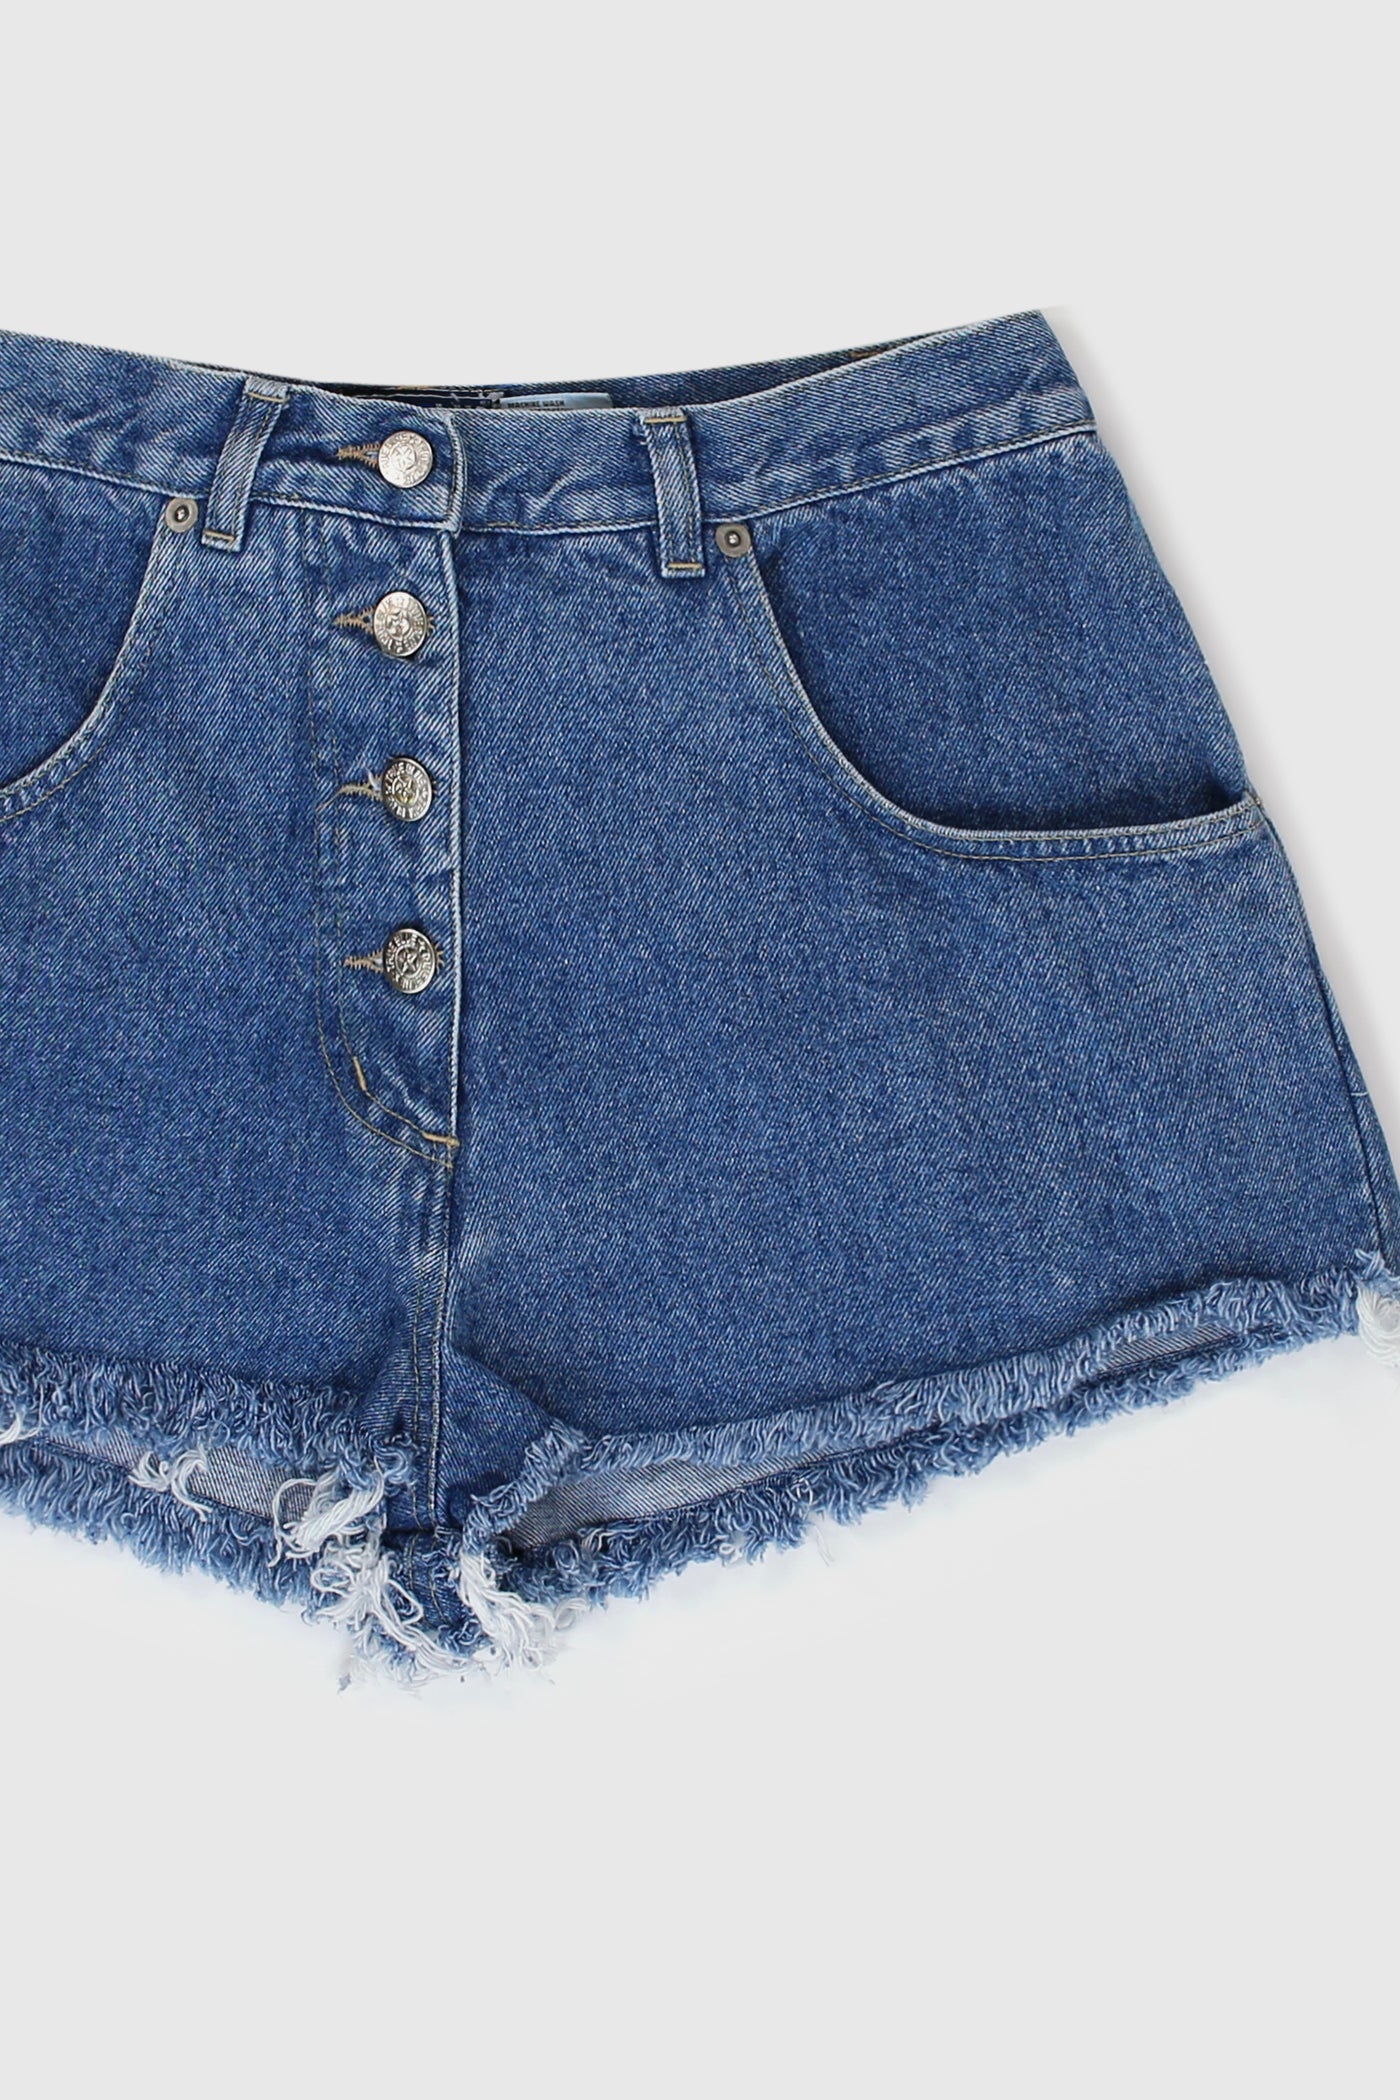 Vintage 90’s Button Up High Rise Medium Wash Shorts